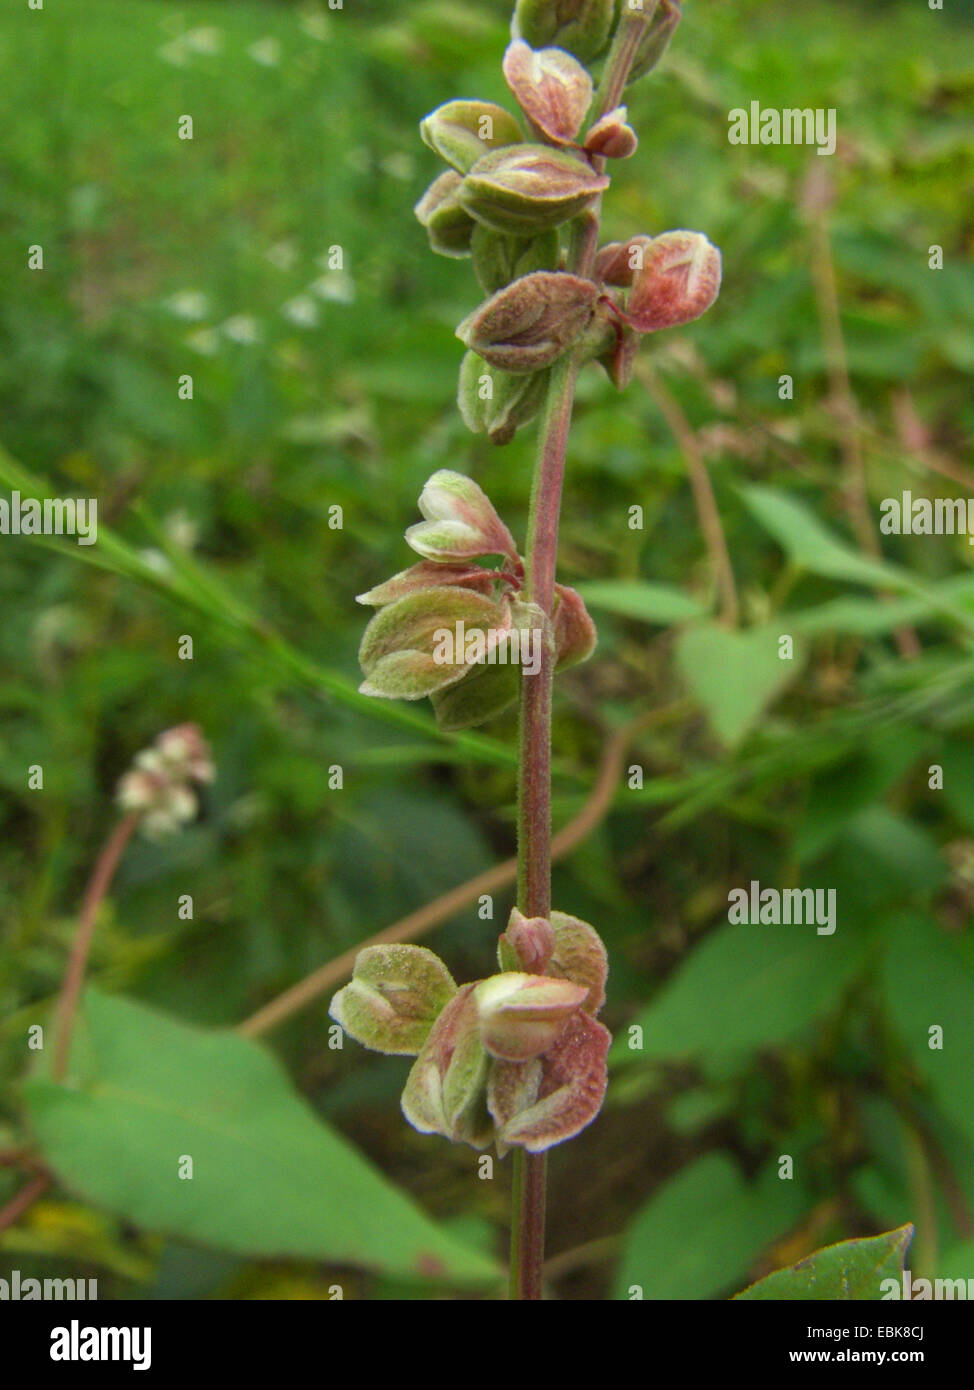 Climbing buckwheat, Black bindweed (Fallopia convolvulus, Polygonum convolvulus, Bilderdykia convolvulus), with fruits, Germany Stock Photo